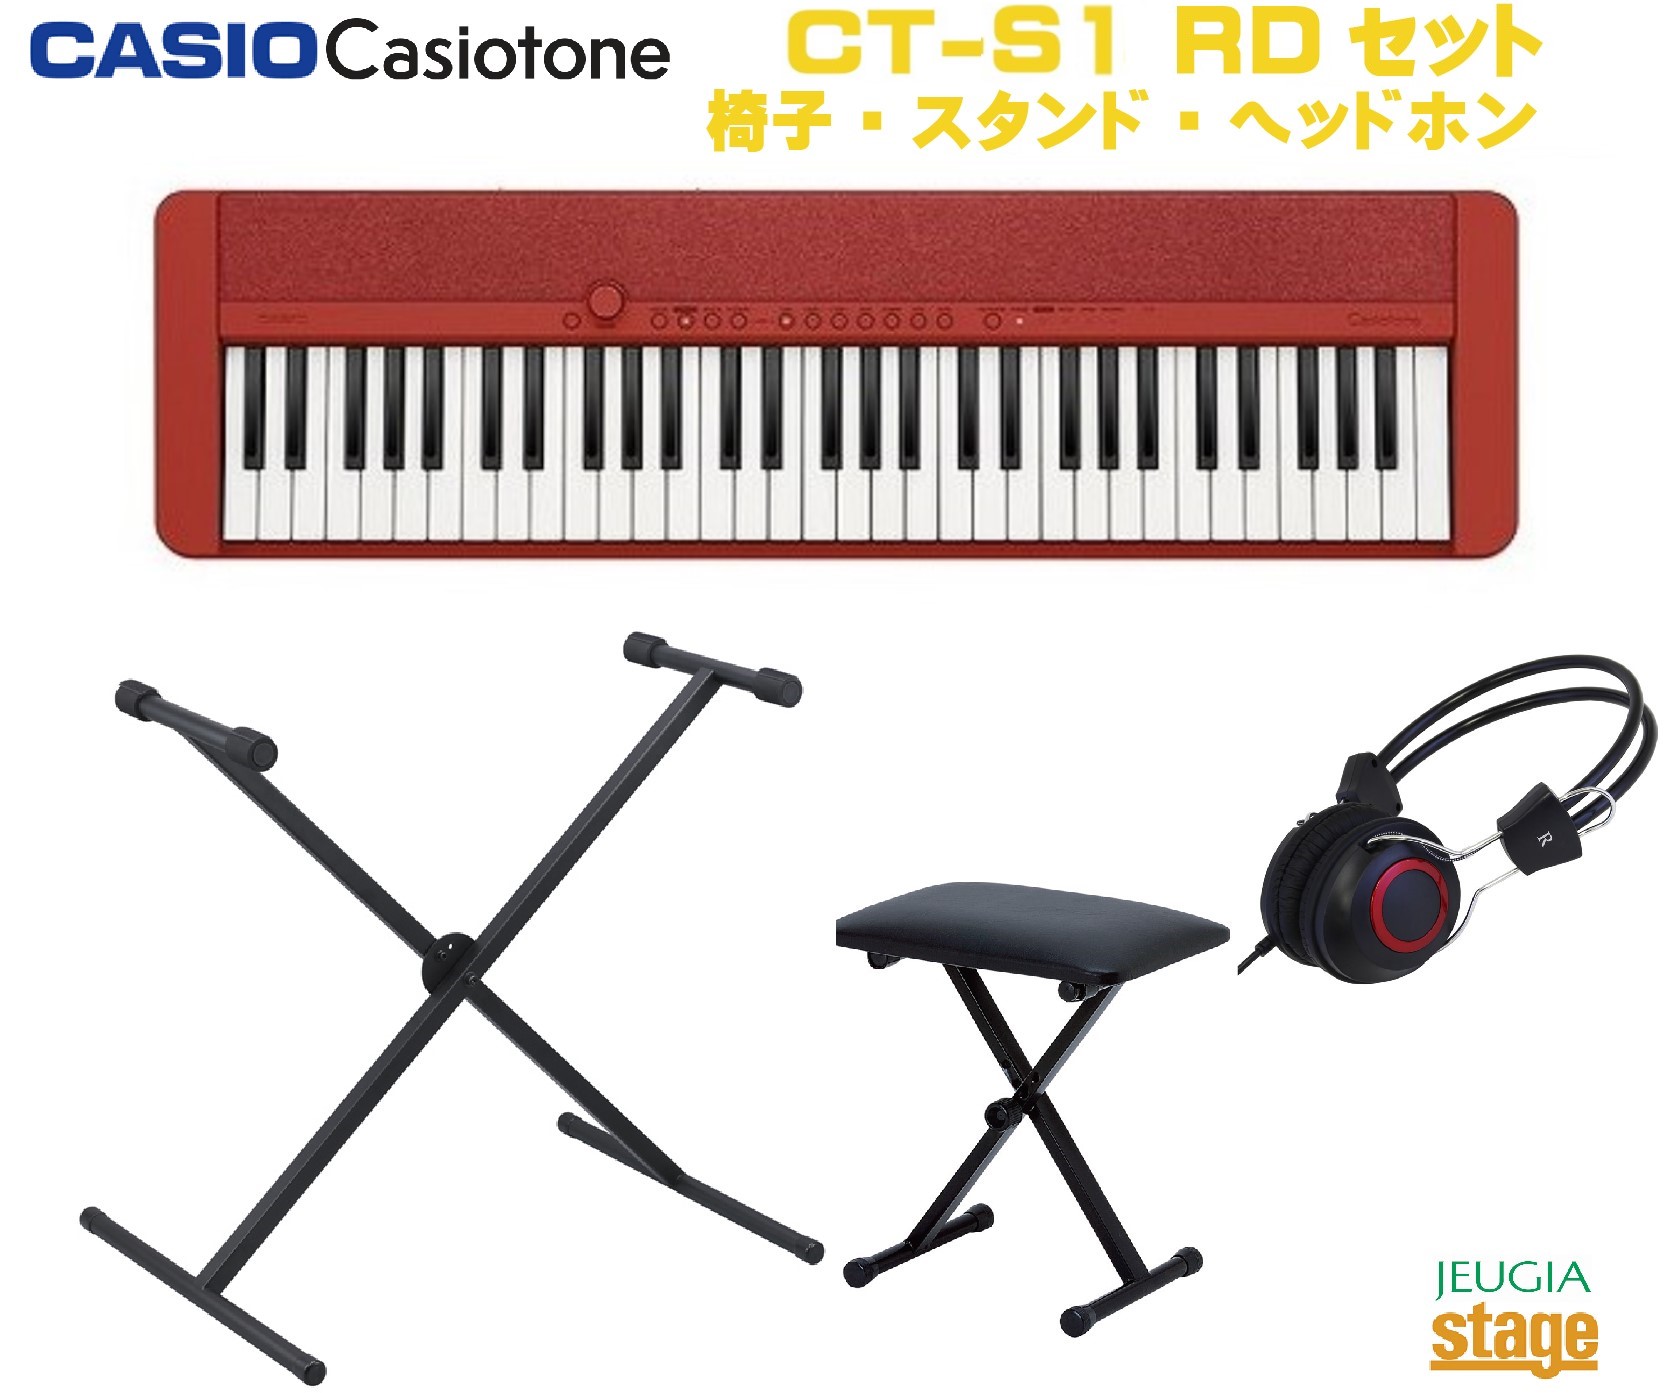 CASIO Casiotone CT-S1 RD RED セット【スタンド・ヘッドホン・X型椅子付き】カシオ カシオトーン キーボード 61鍵 レッド 【Stage-Rakuten Keyboard SET】